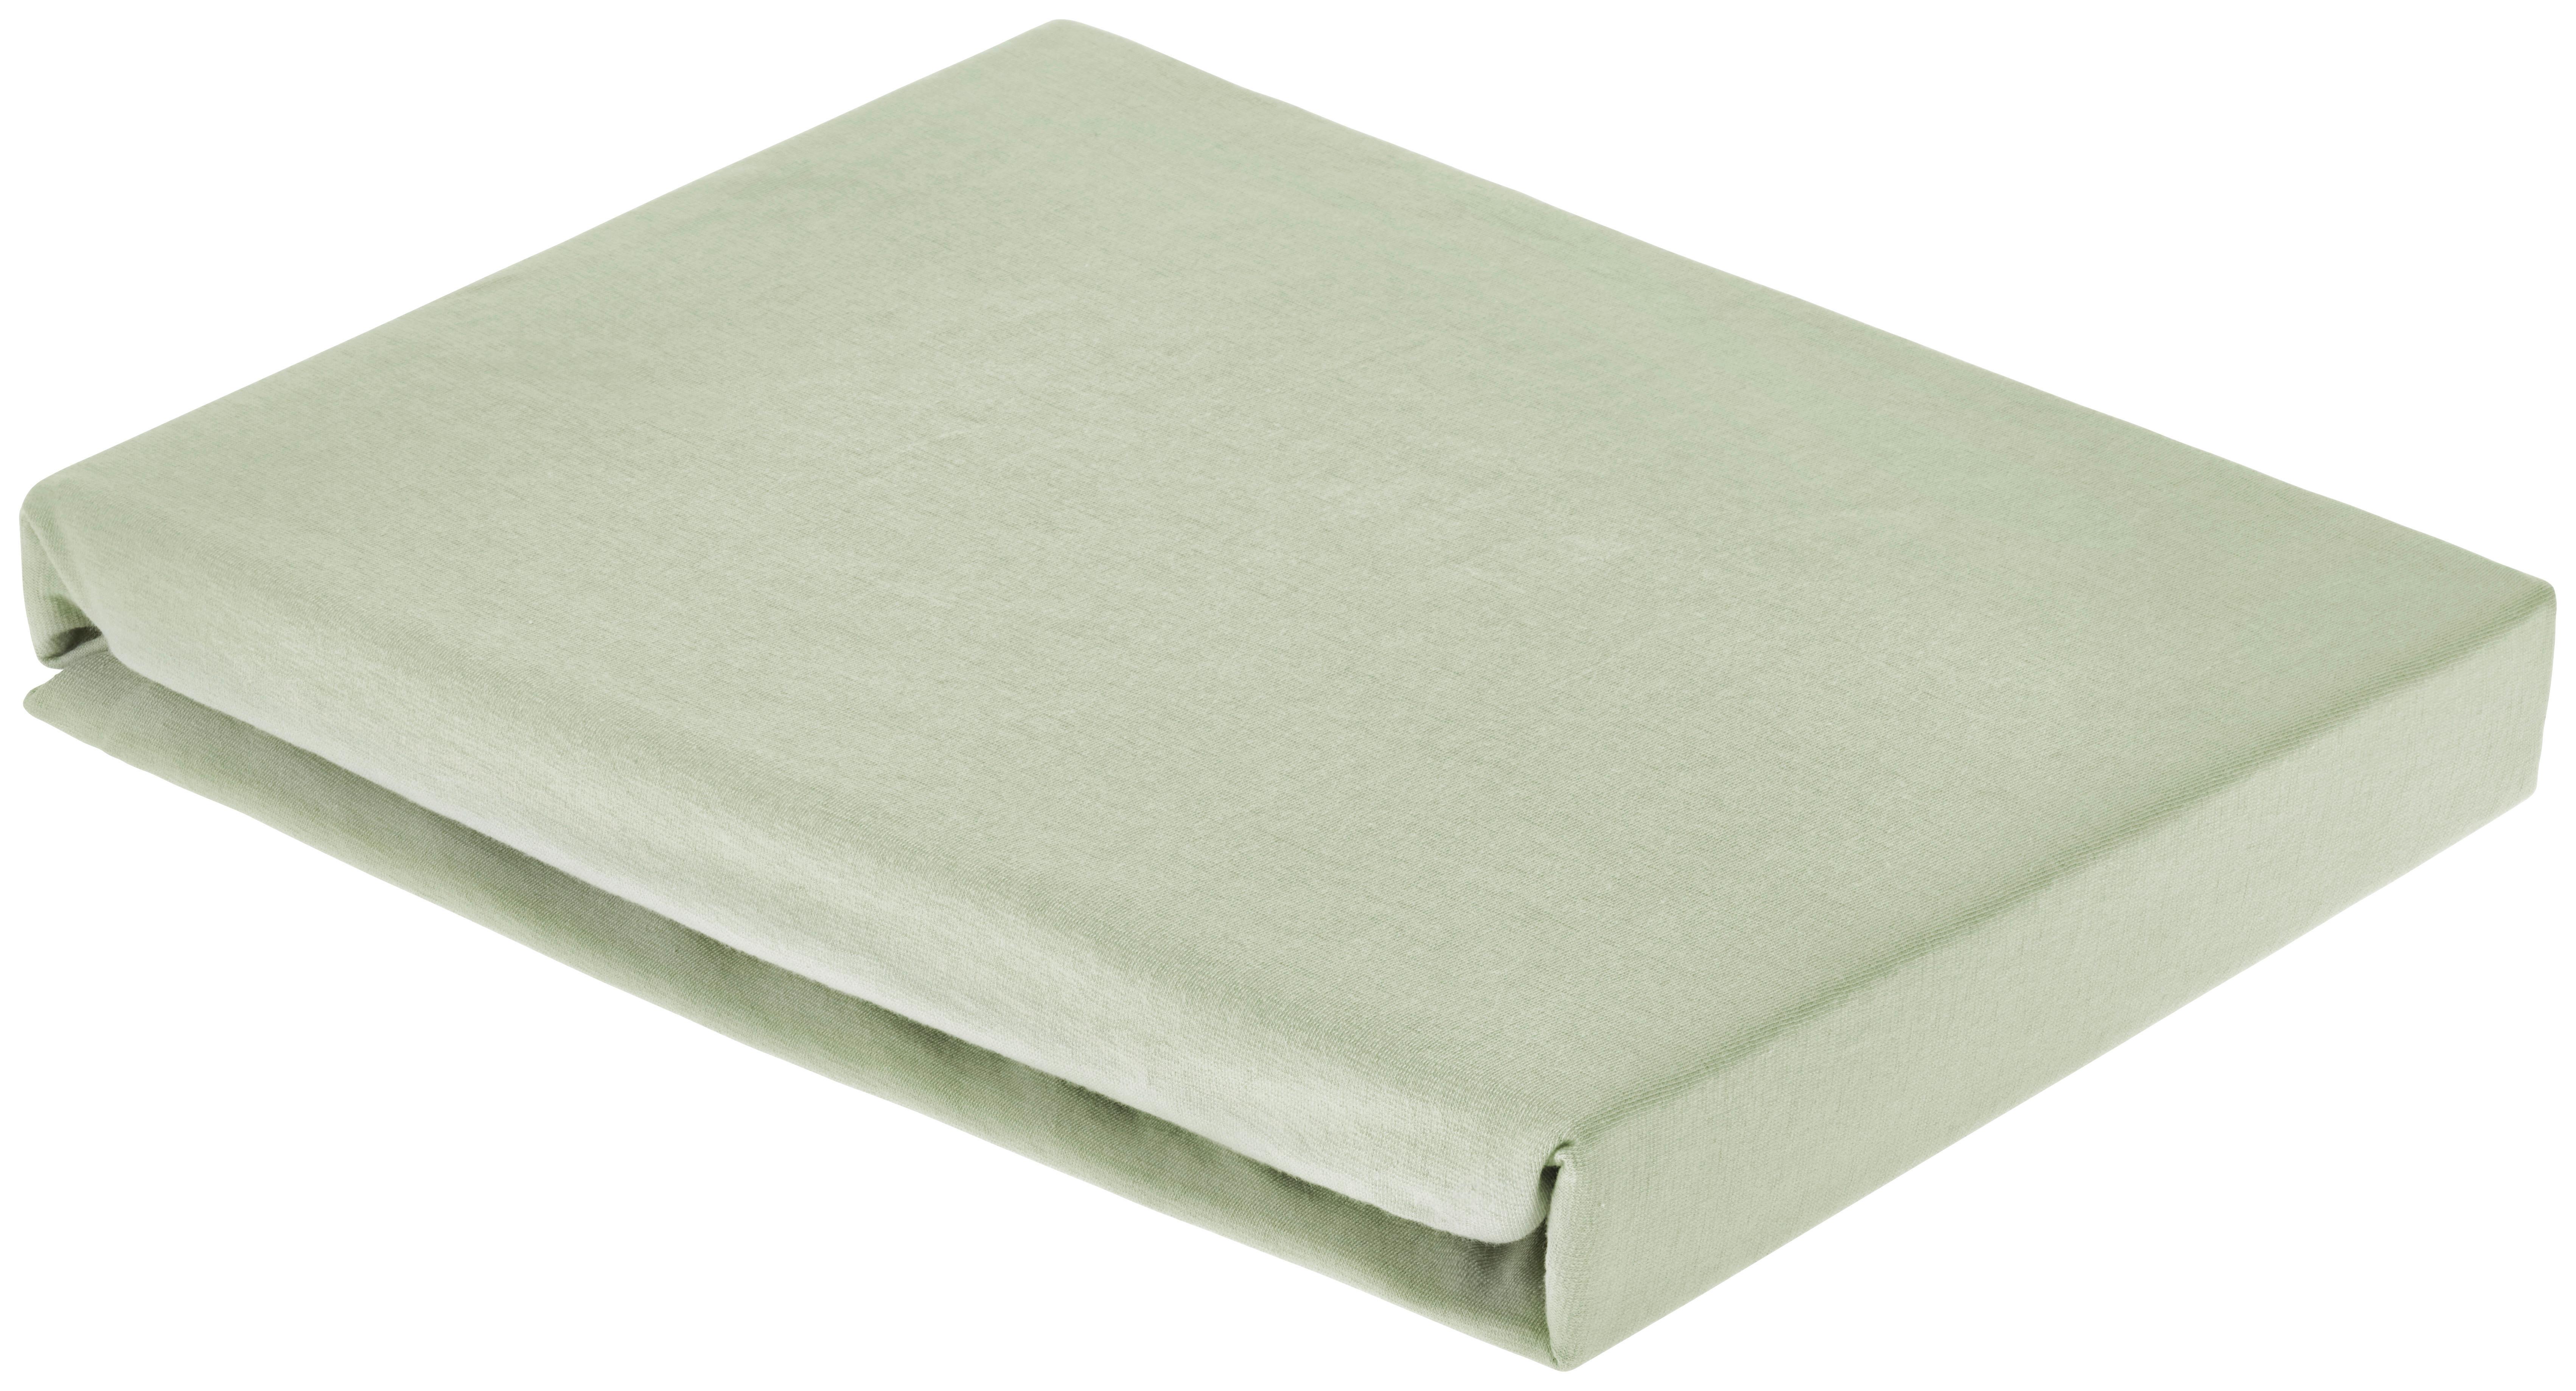 Prostěradlo Na Vrchní Matraci Elasthan Topper, 160/200cm - zelená, textil (160/200/15cm) - Premium Living